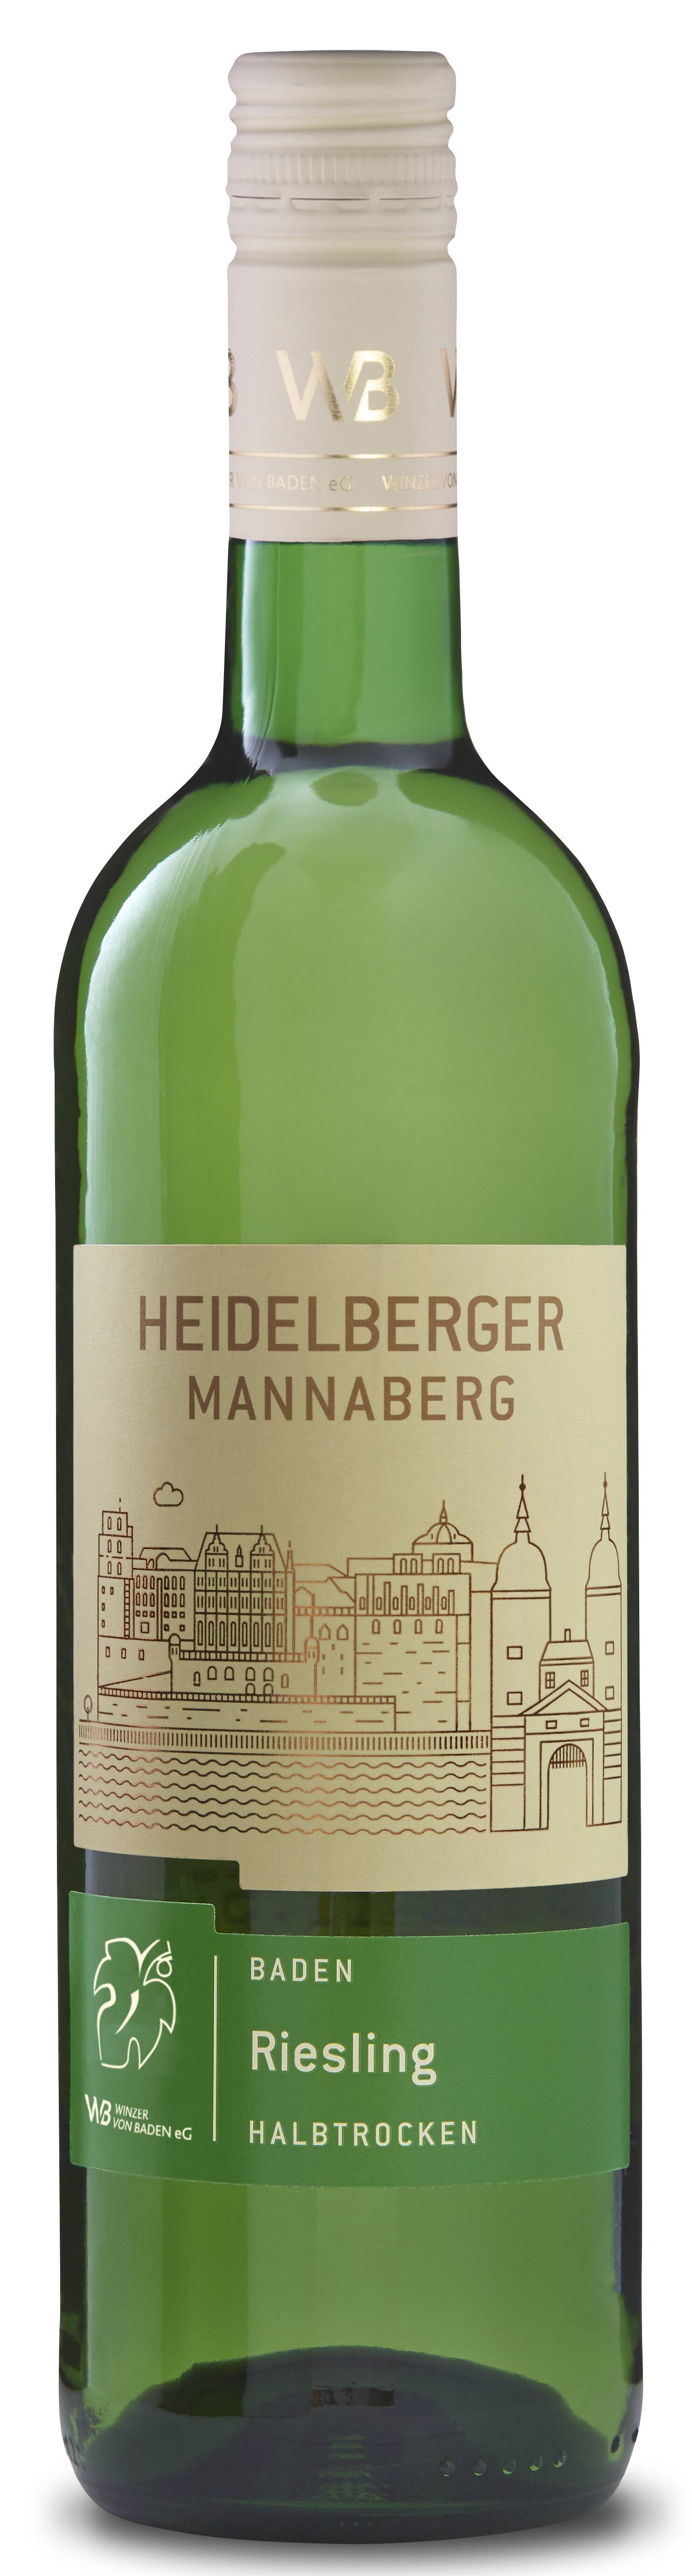 Heidelberger Mannaberg Riesling